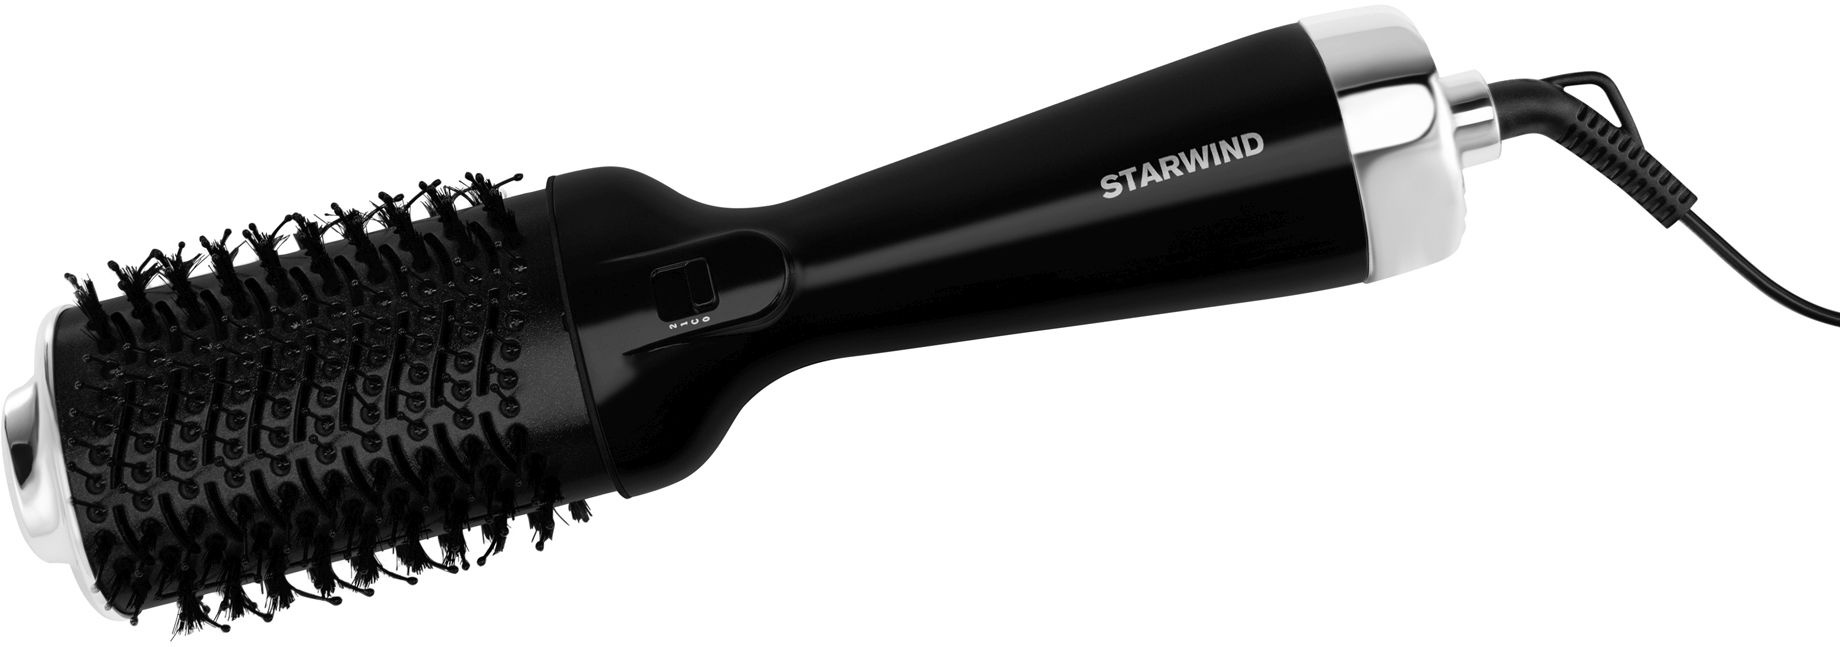 Фен-щетка Starwind SHB 7760 черный/серебристый от магазина Старвинд